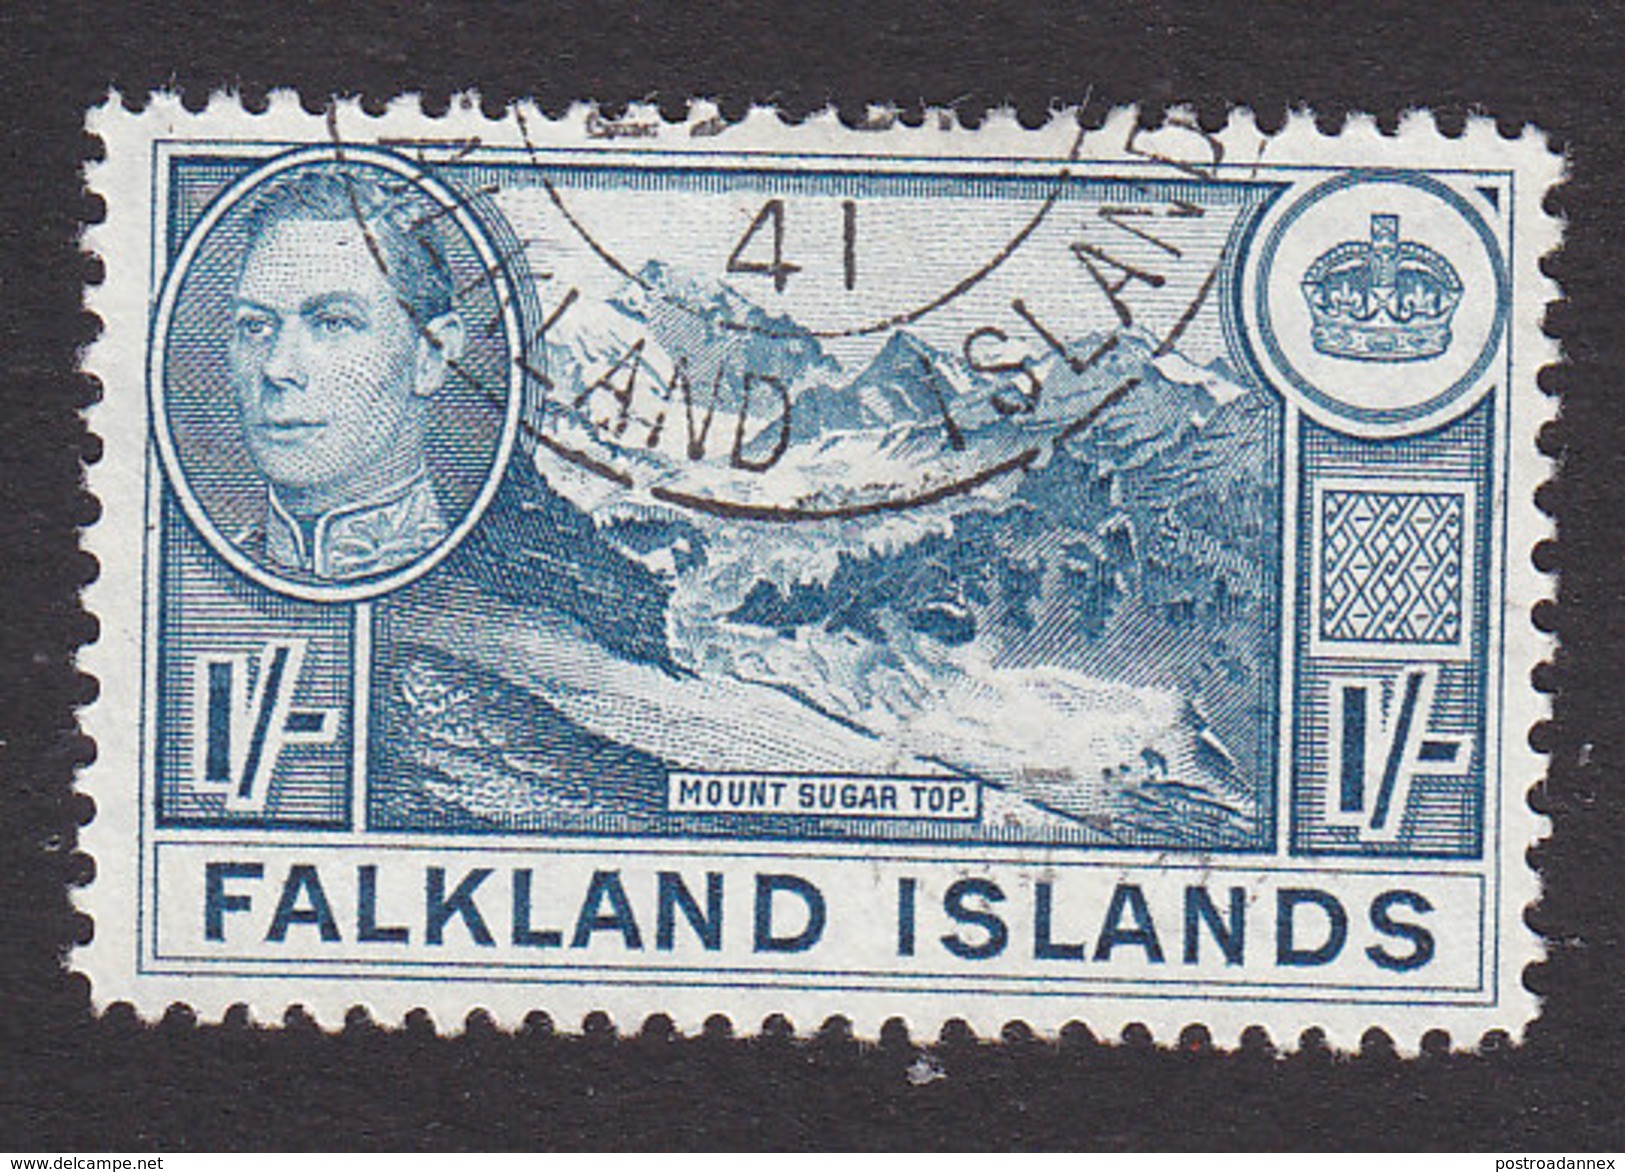 Falkland Islands, Scott #91, Used, George VI And Scenes Of Falkland Islands, Issued 1938 - Falkland Islands